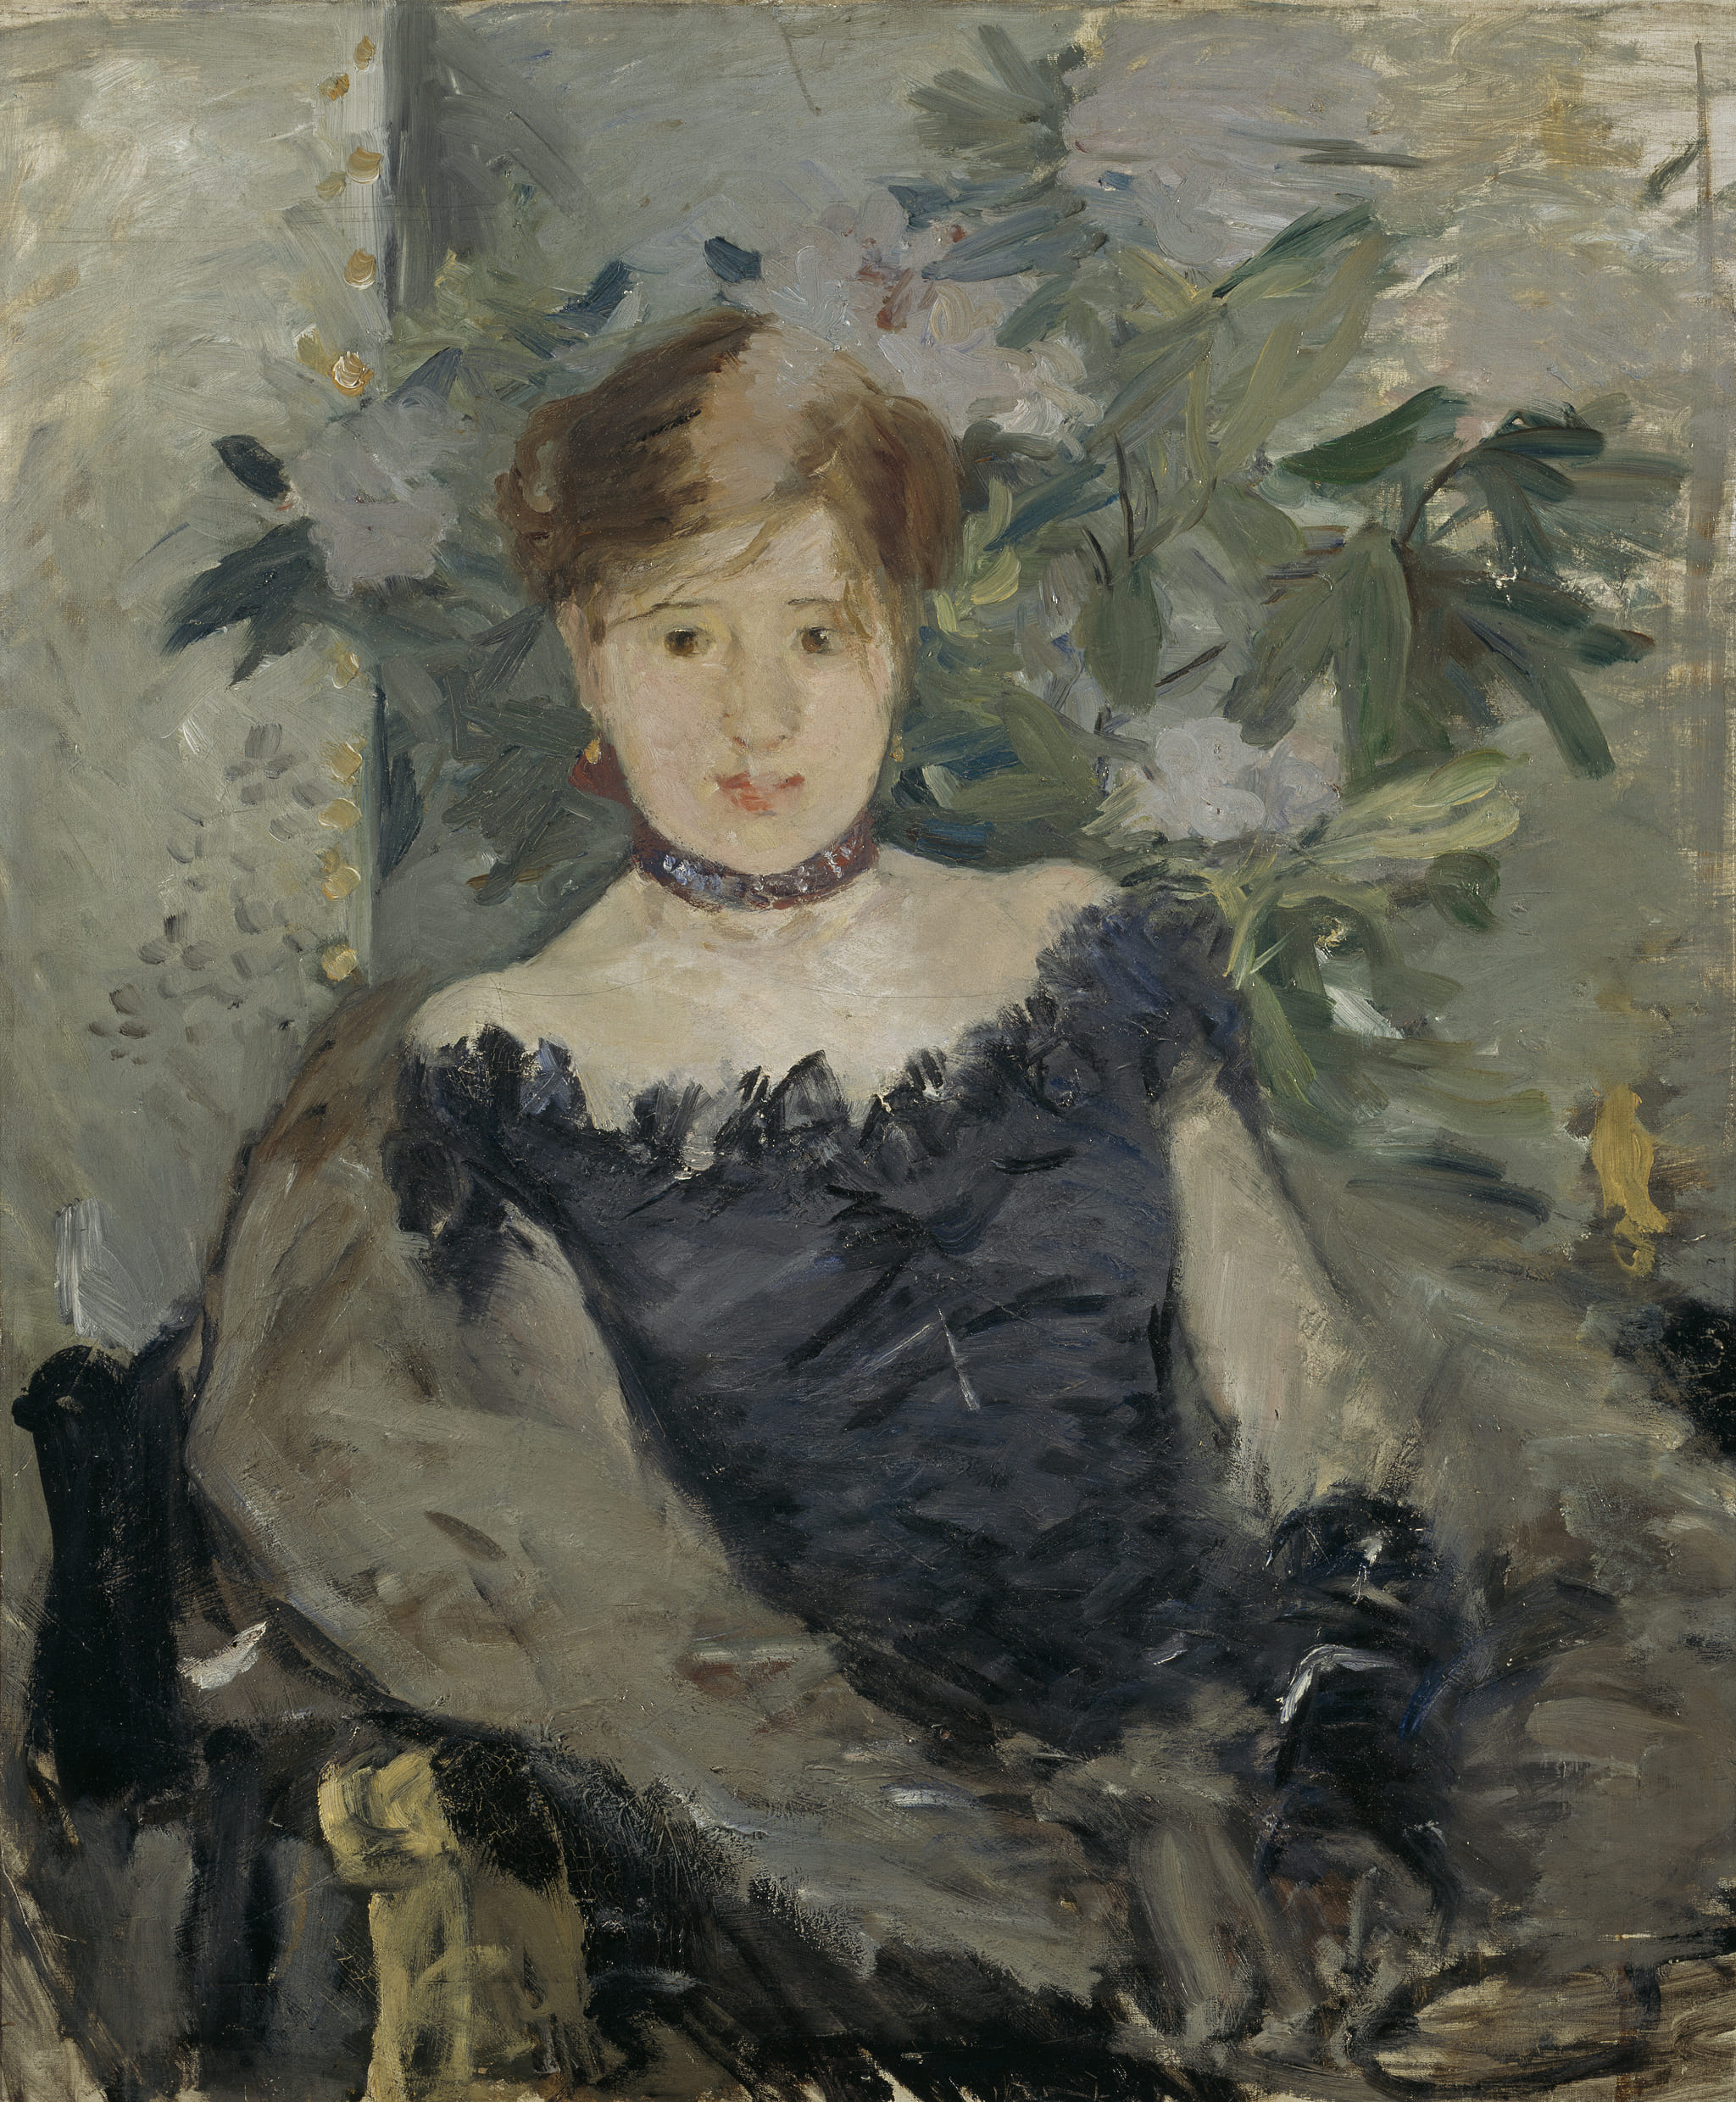 Berthe Morisot, Oil on canvas, 57.15 x 71.12cm. Minneapolis Institute of Art, The John R. Van Derlip Fund, 96.40 Photo: Minneapolis Institute of Art. Licenced under CC BY 4.0